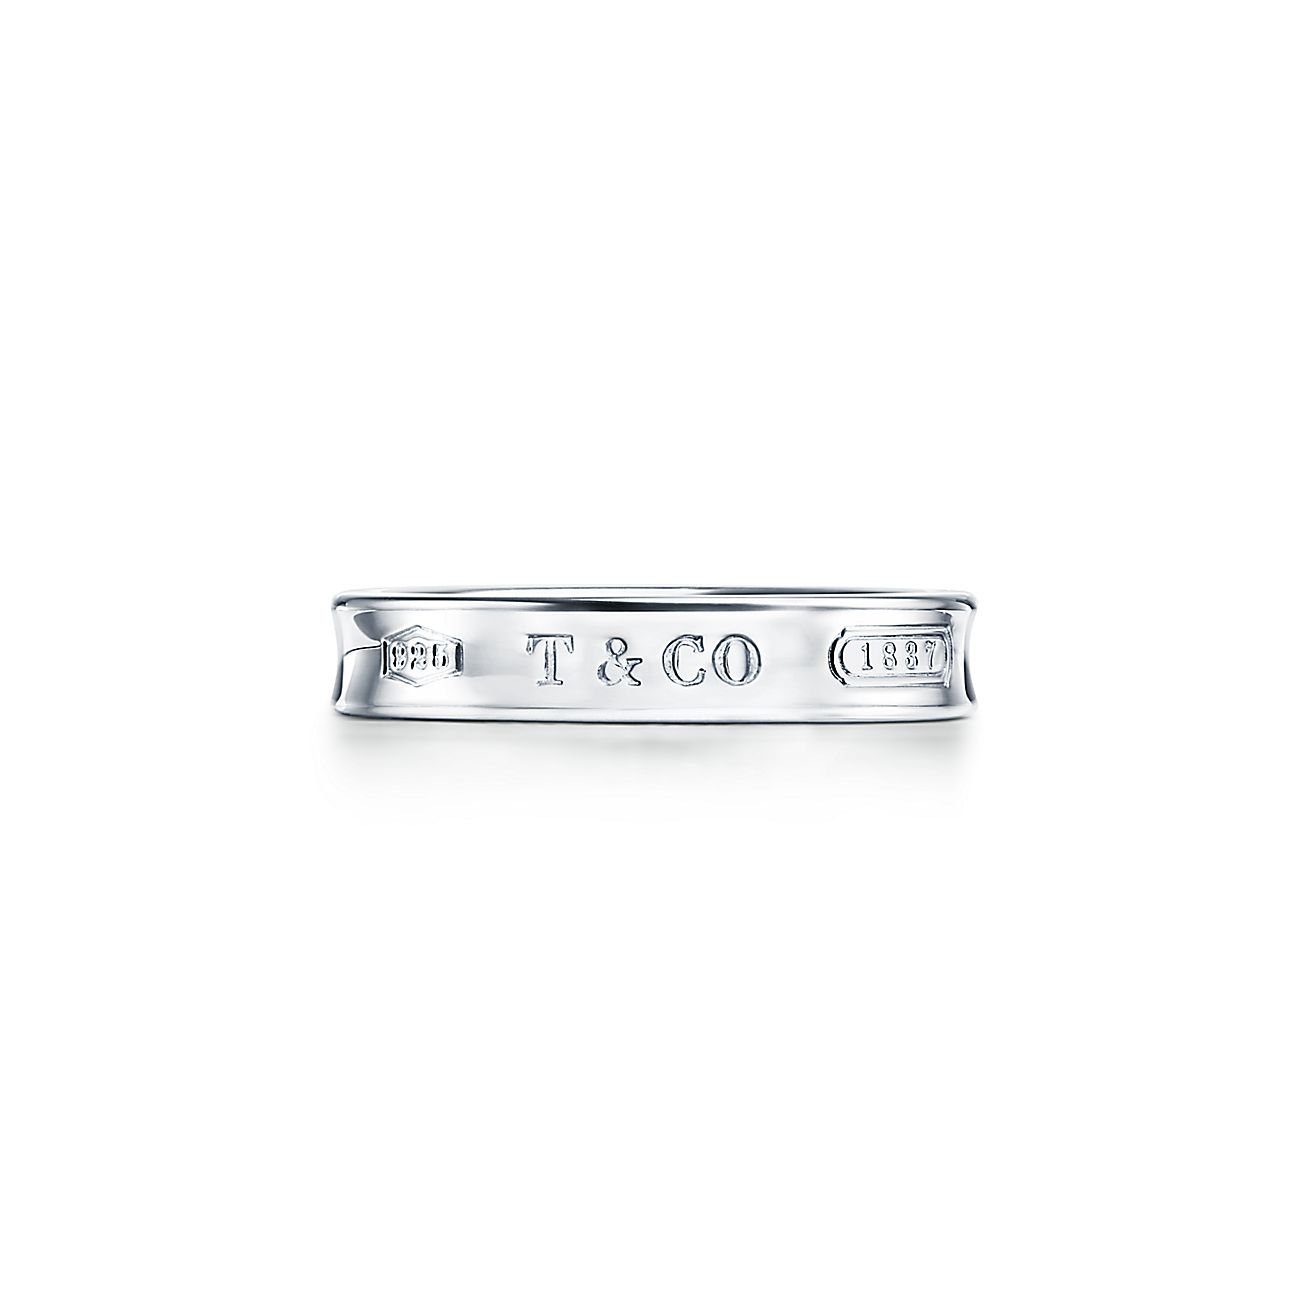 Vriendelijkheid Zuivelproducten vuist Tiffany 1837® Ring in Silver, Narrow | Tiffany & Co.